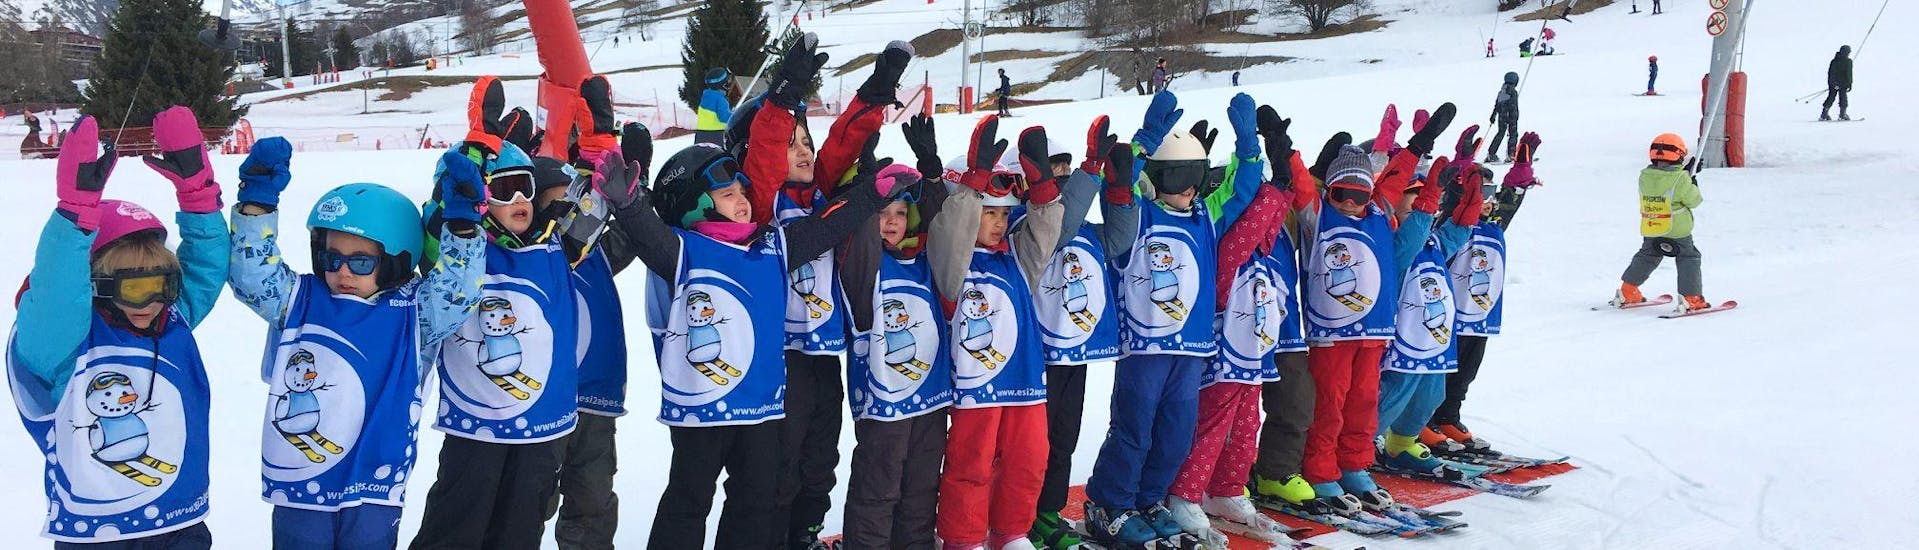 kids-ski-lessons-4-6-years-esi-st-christophe-les-deux-alpes-hero